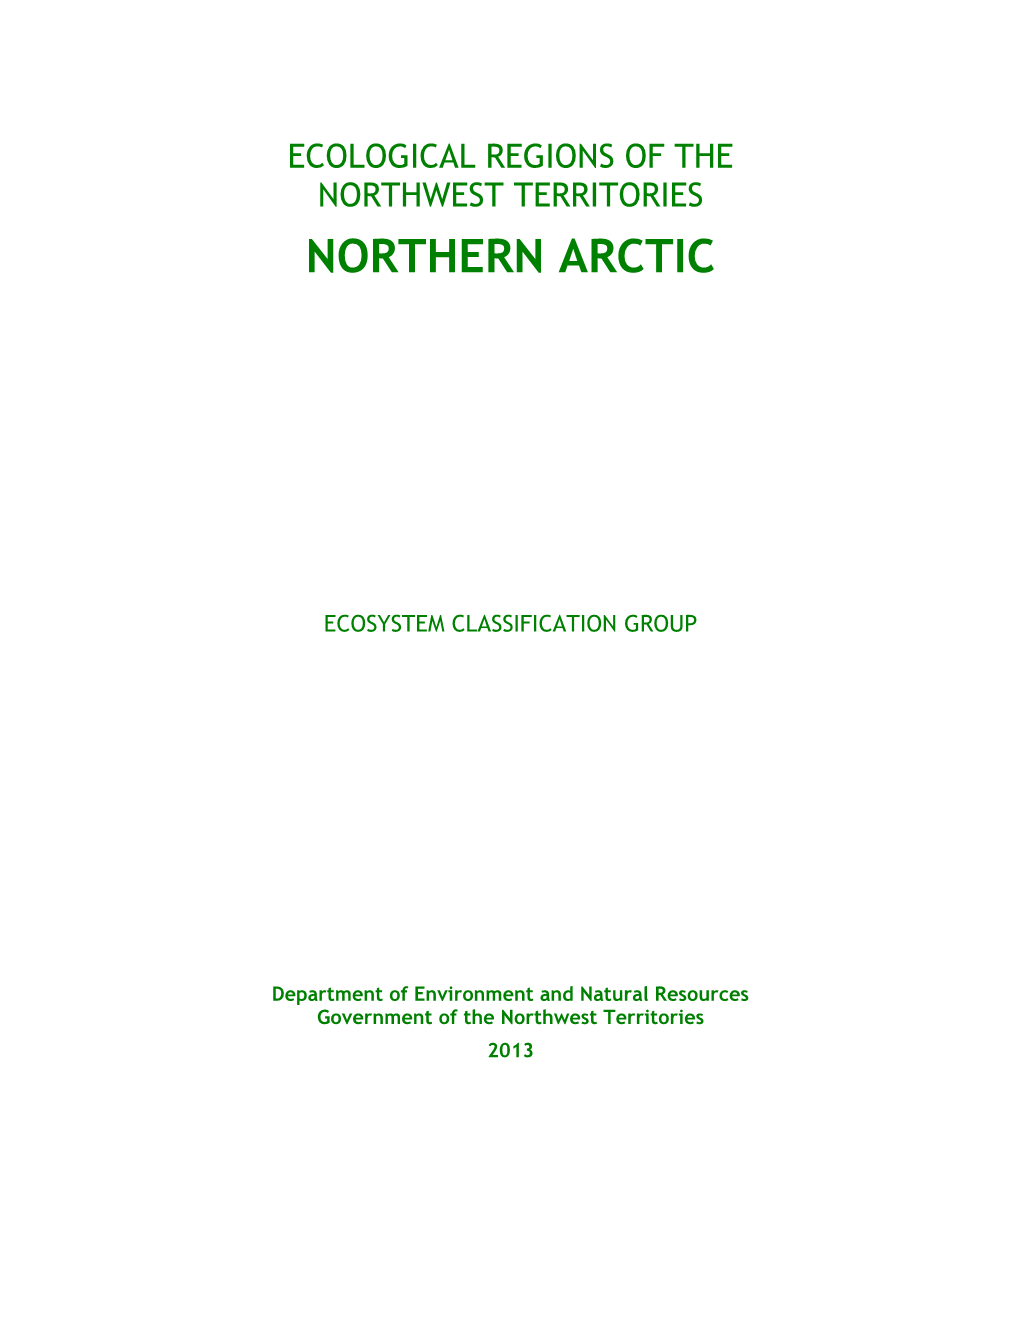 Northern Arctic